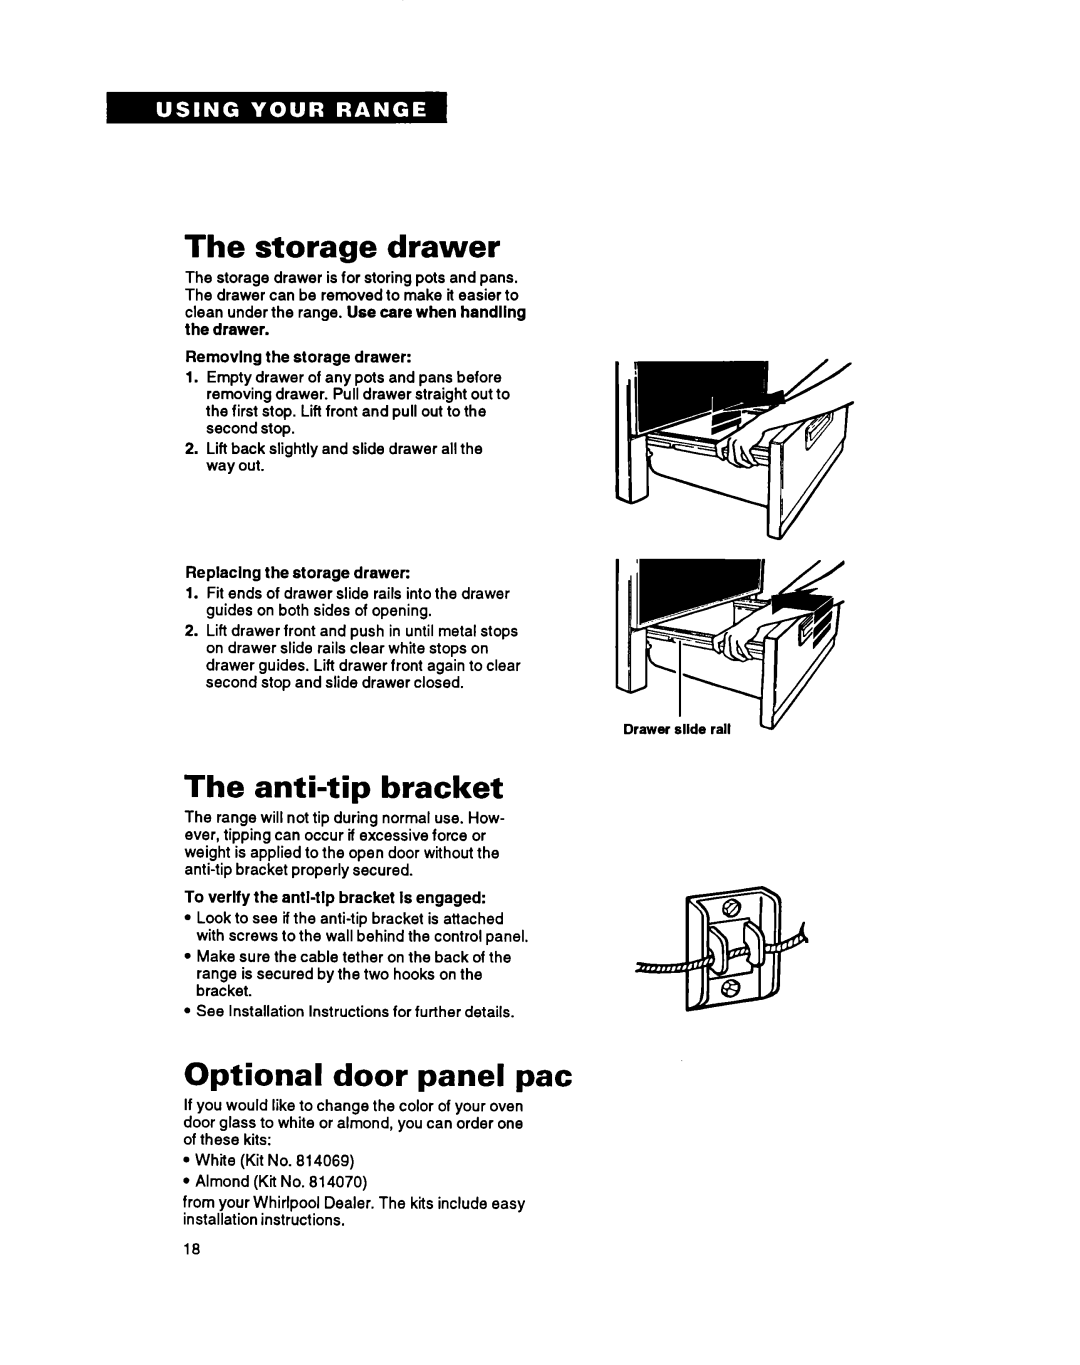 Whirlpool TER46WOY manual The storage drawer, The anti-tipbracket, Optional door panel pat 